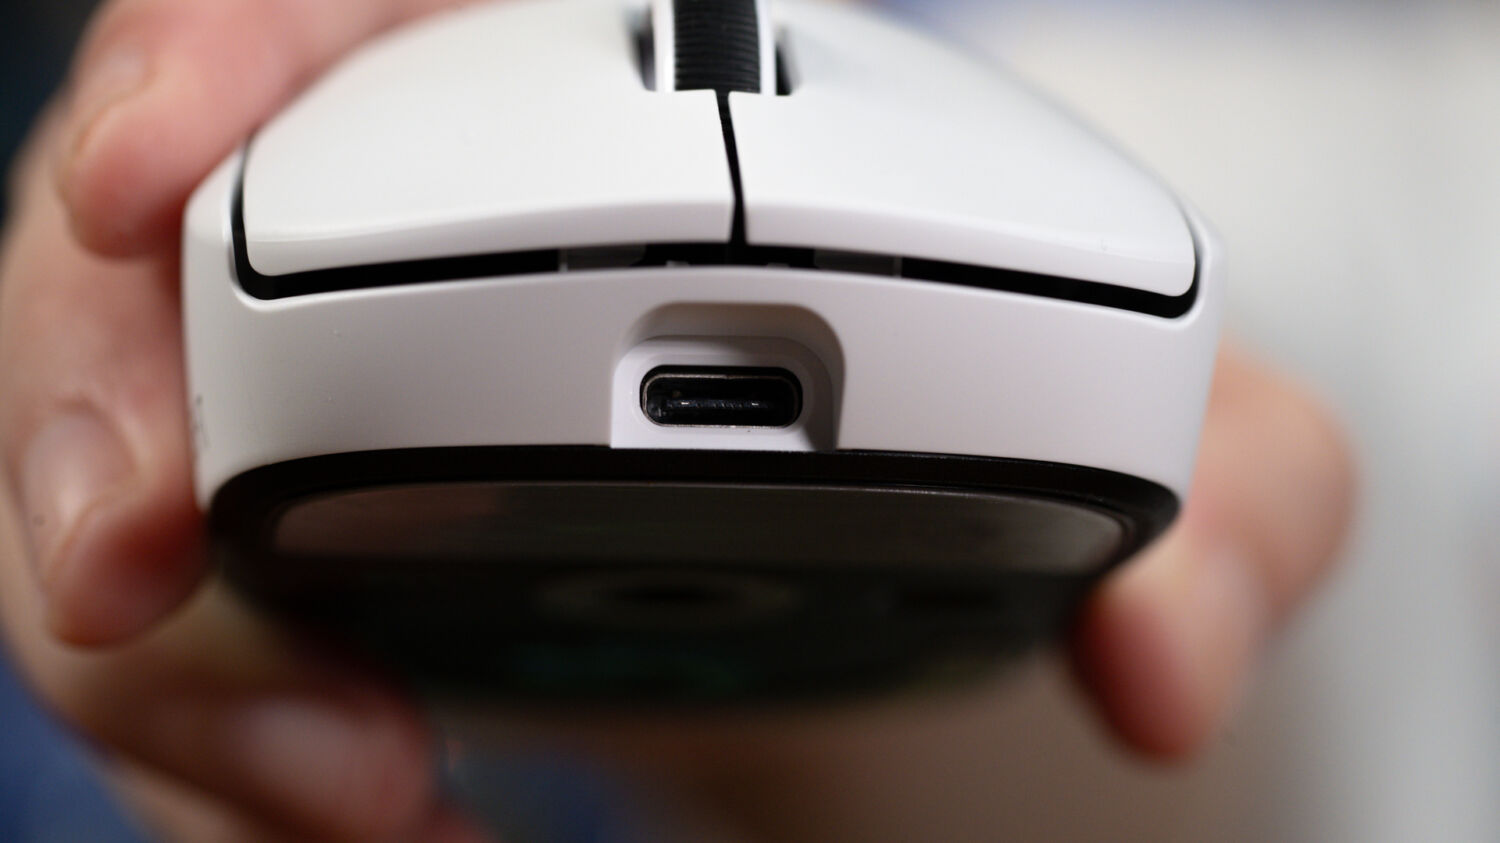 Geek Review: Logitech G Pro X Superlight Wireless Gaming Mouse